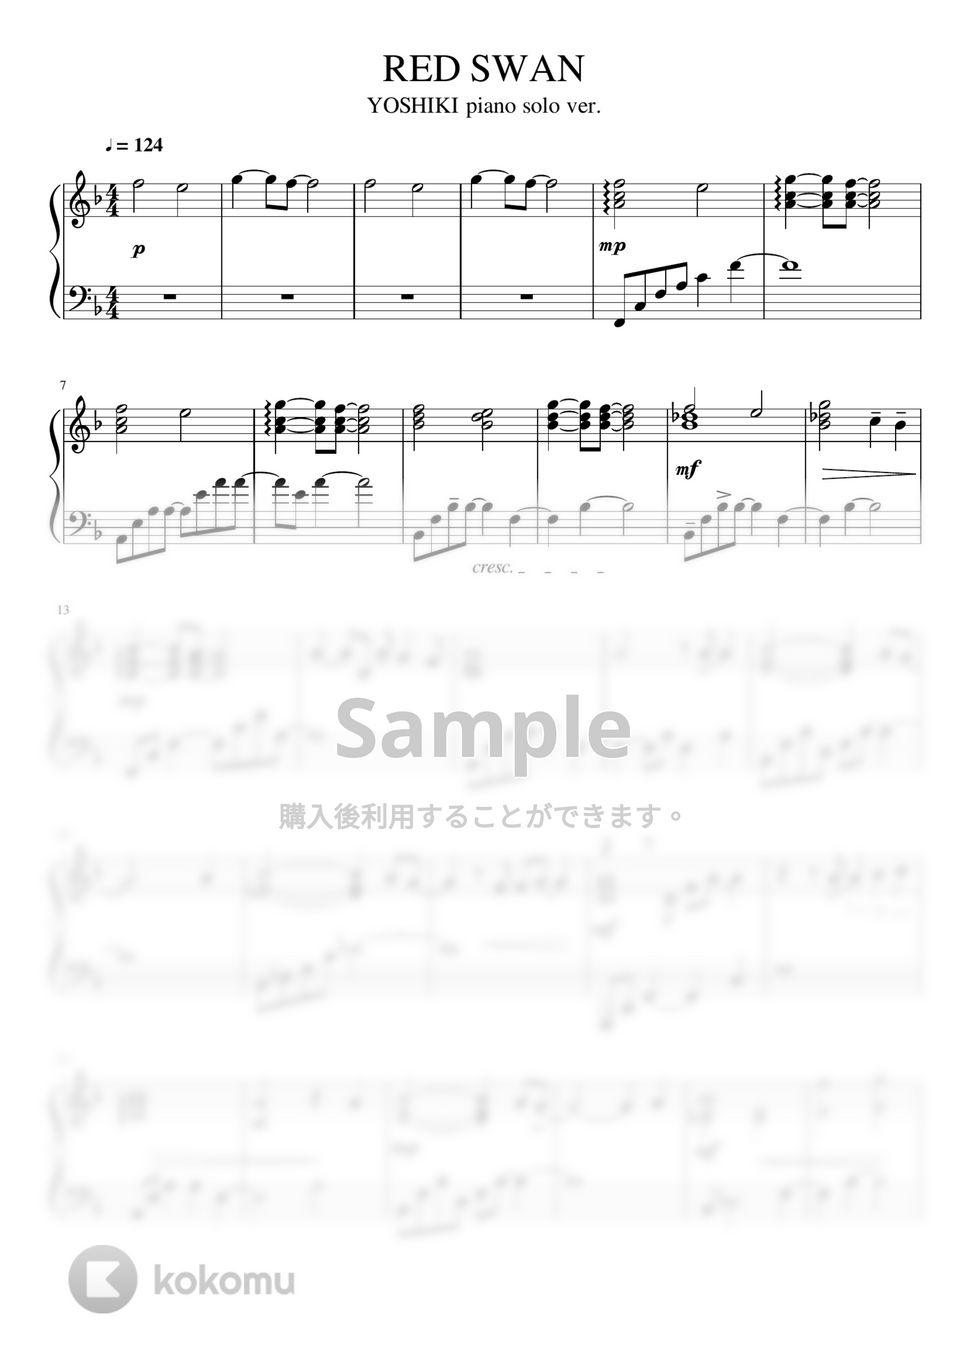 YOSHIKI feat.HYDE - RED SWAN (進撃の巨人) by EBIKEIKO